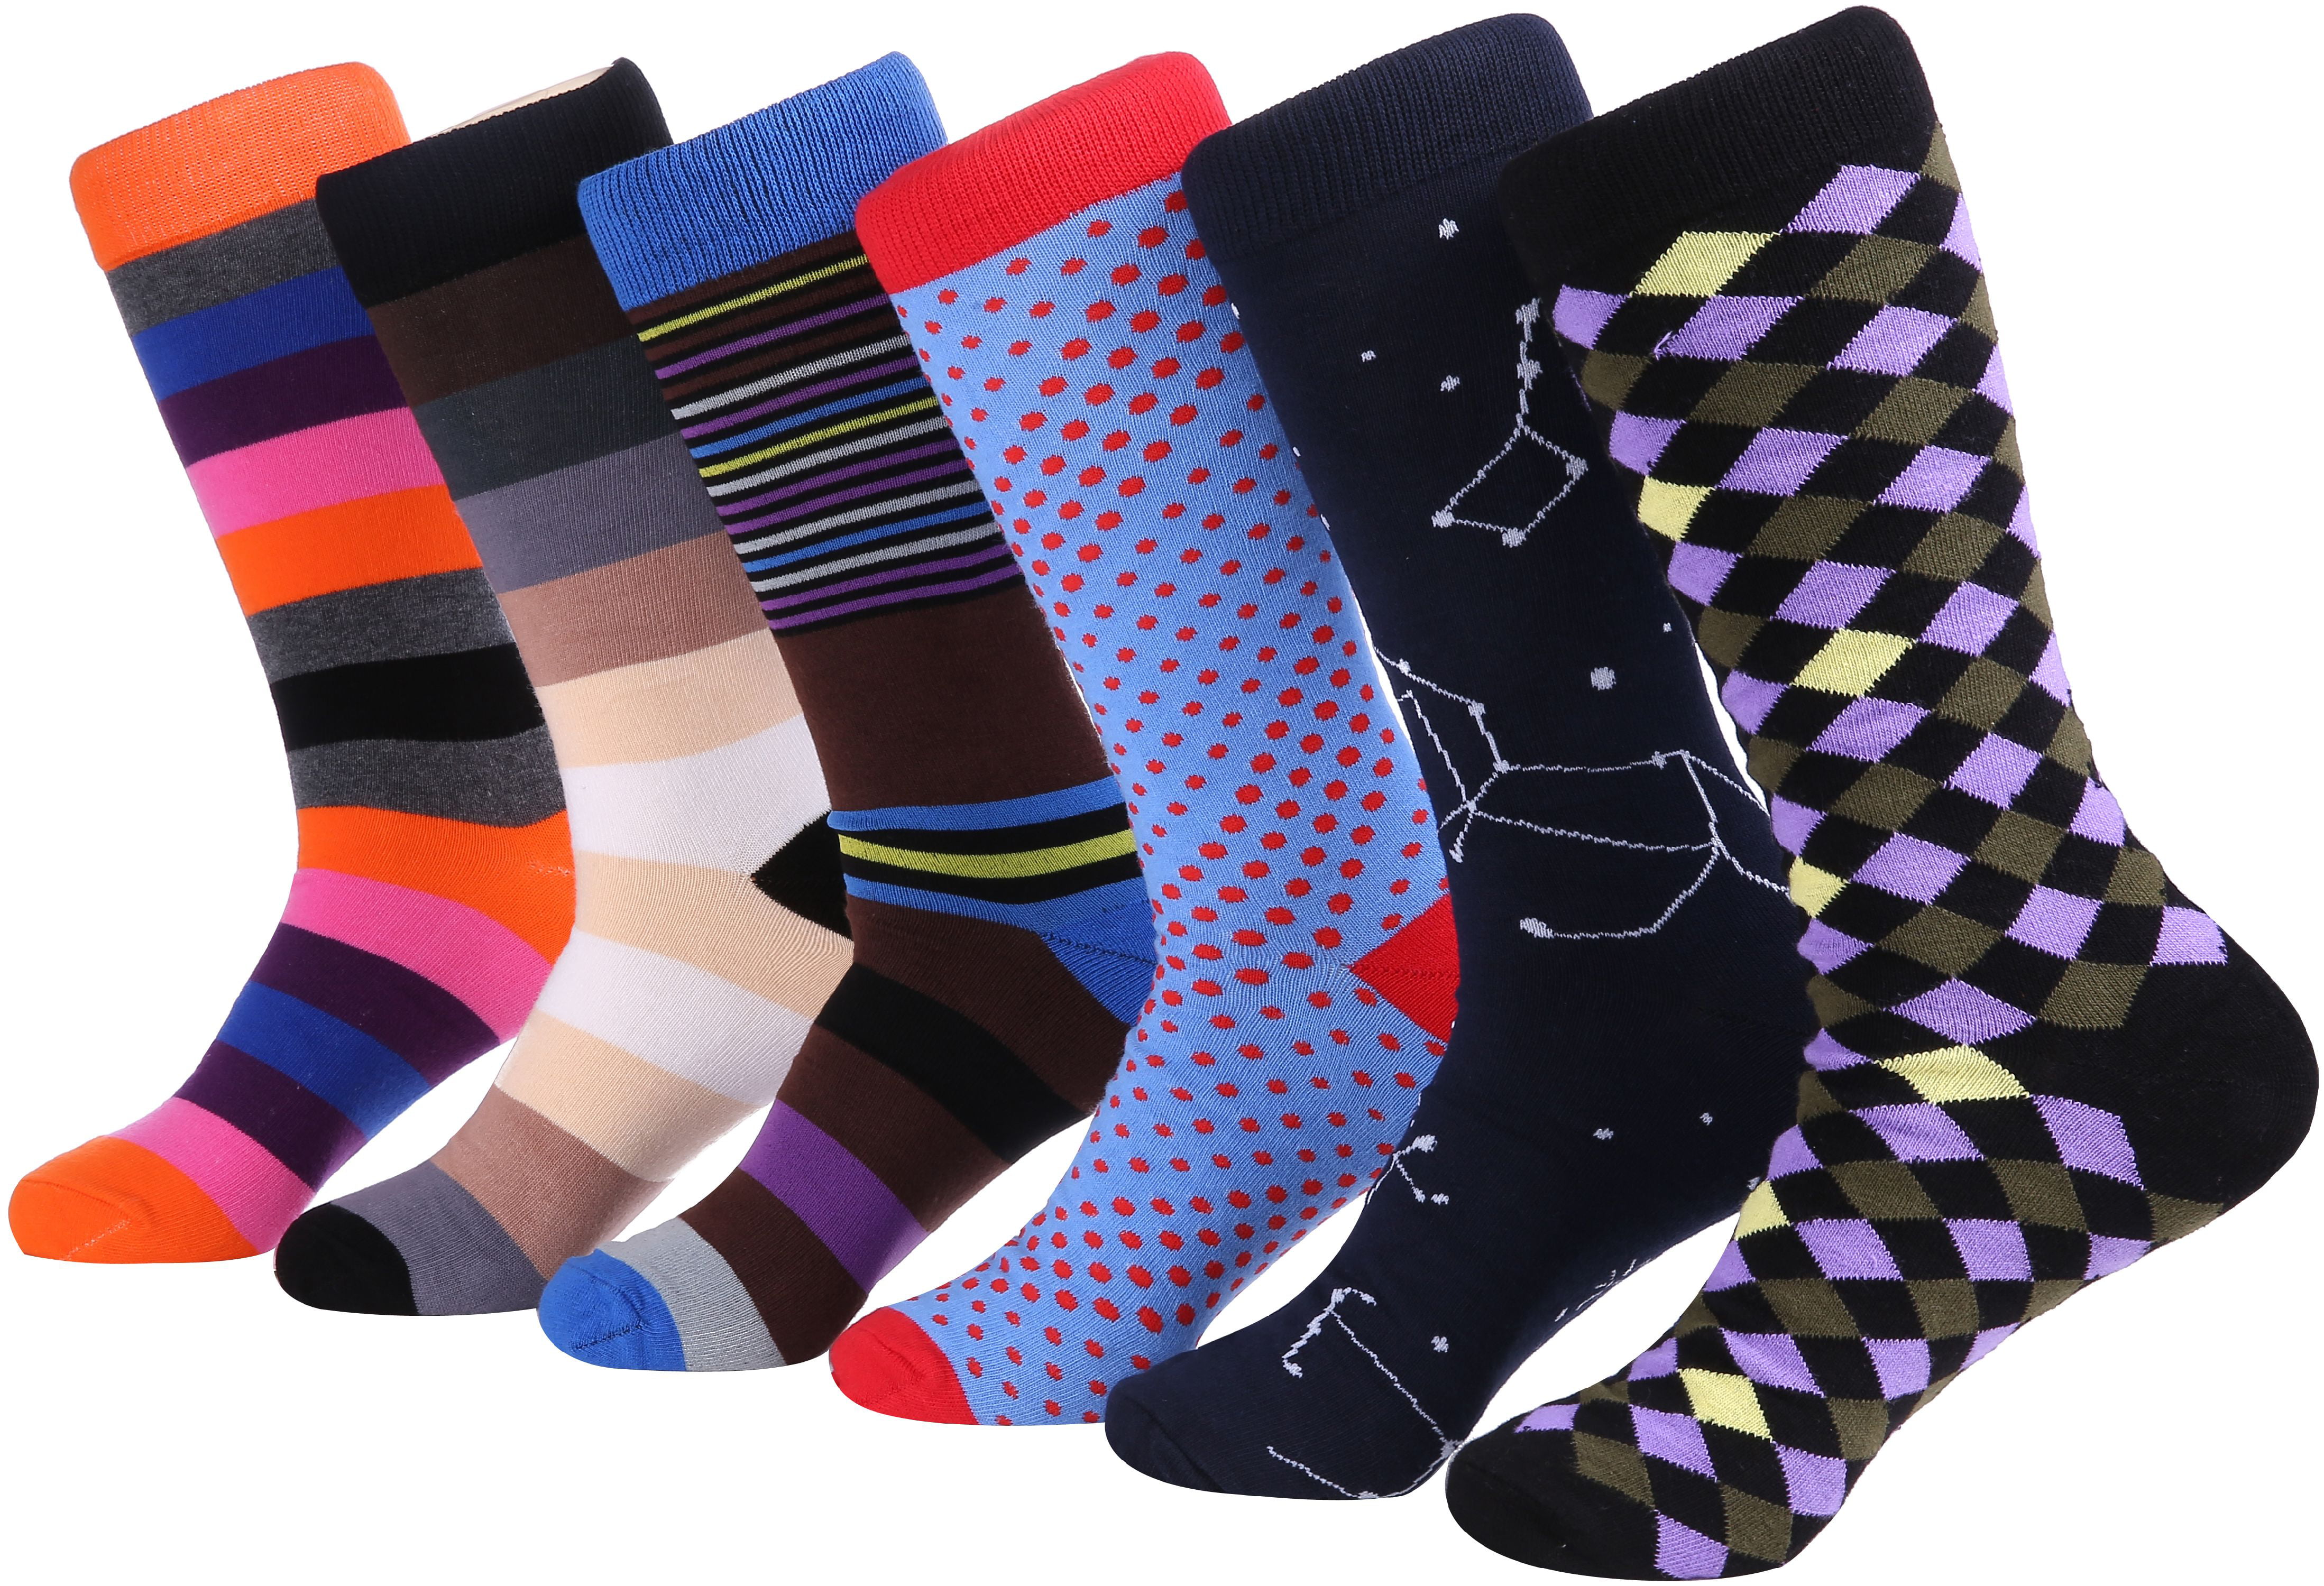 Mio Marino - Marino Mens Dress Socks - Fun Colorful Socks for Men ...